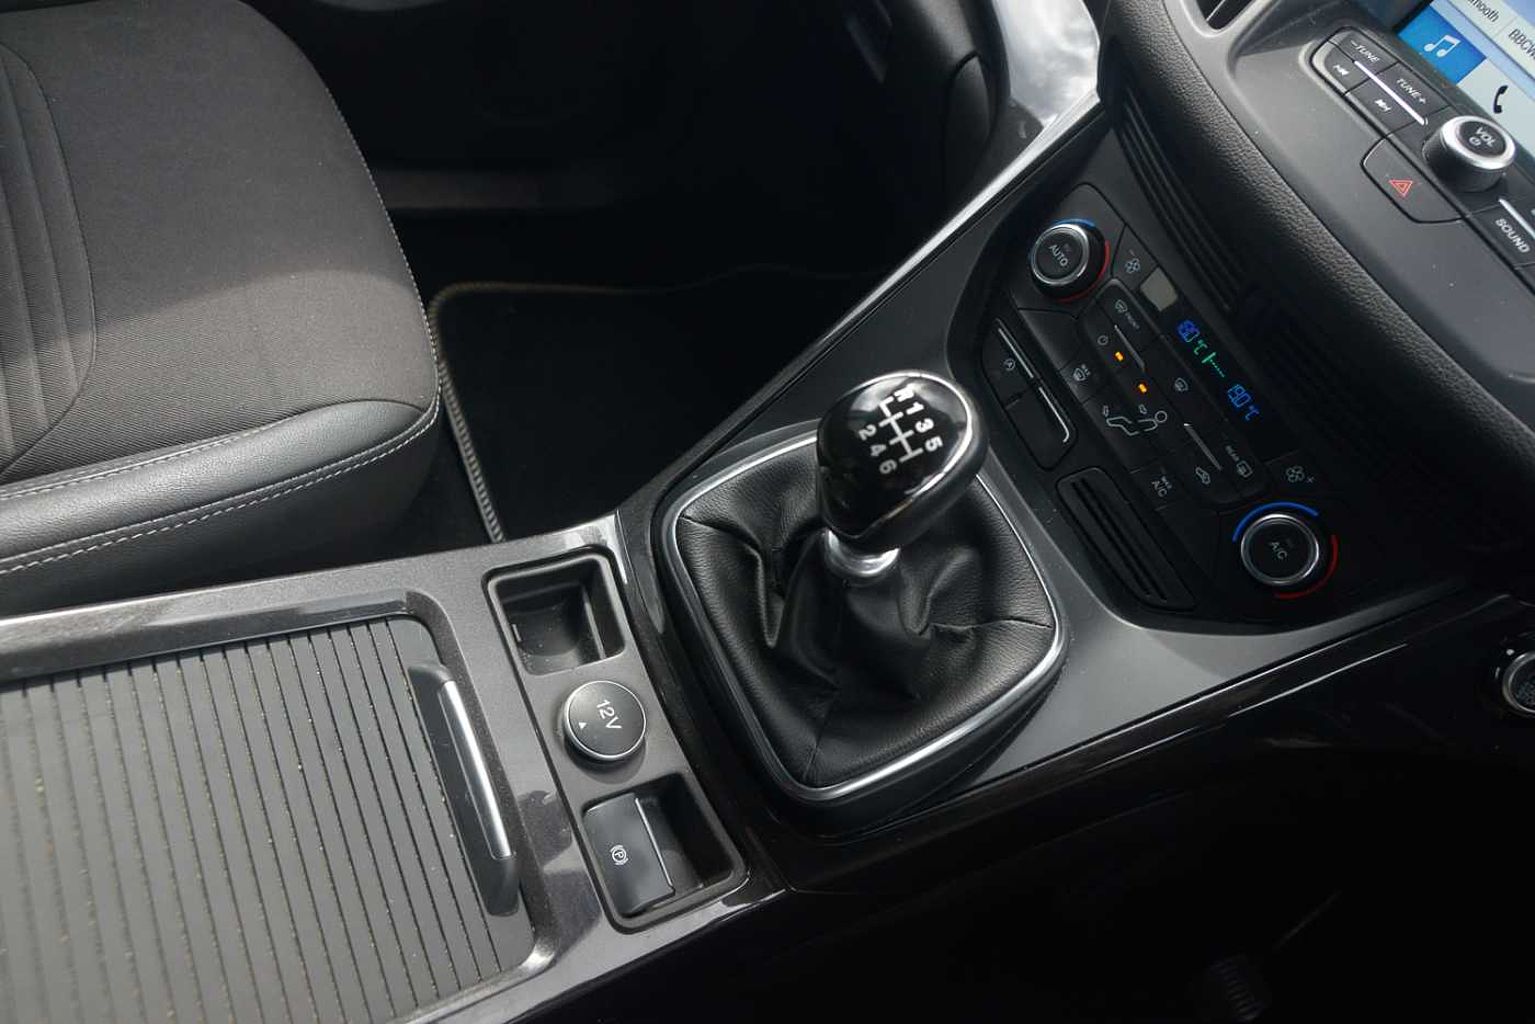 Ford Kuga 2.0 TDCi Titanium (150 PS) 5-Door MPV